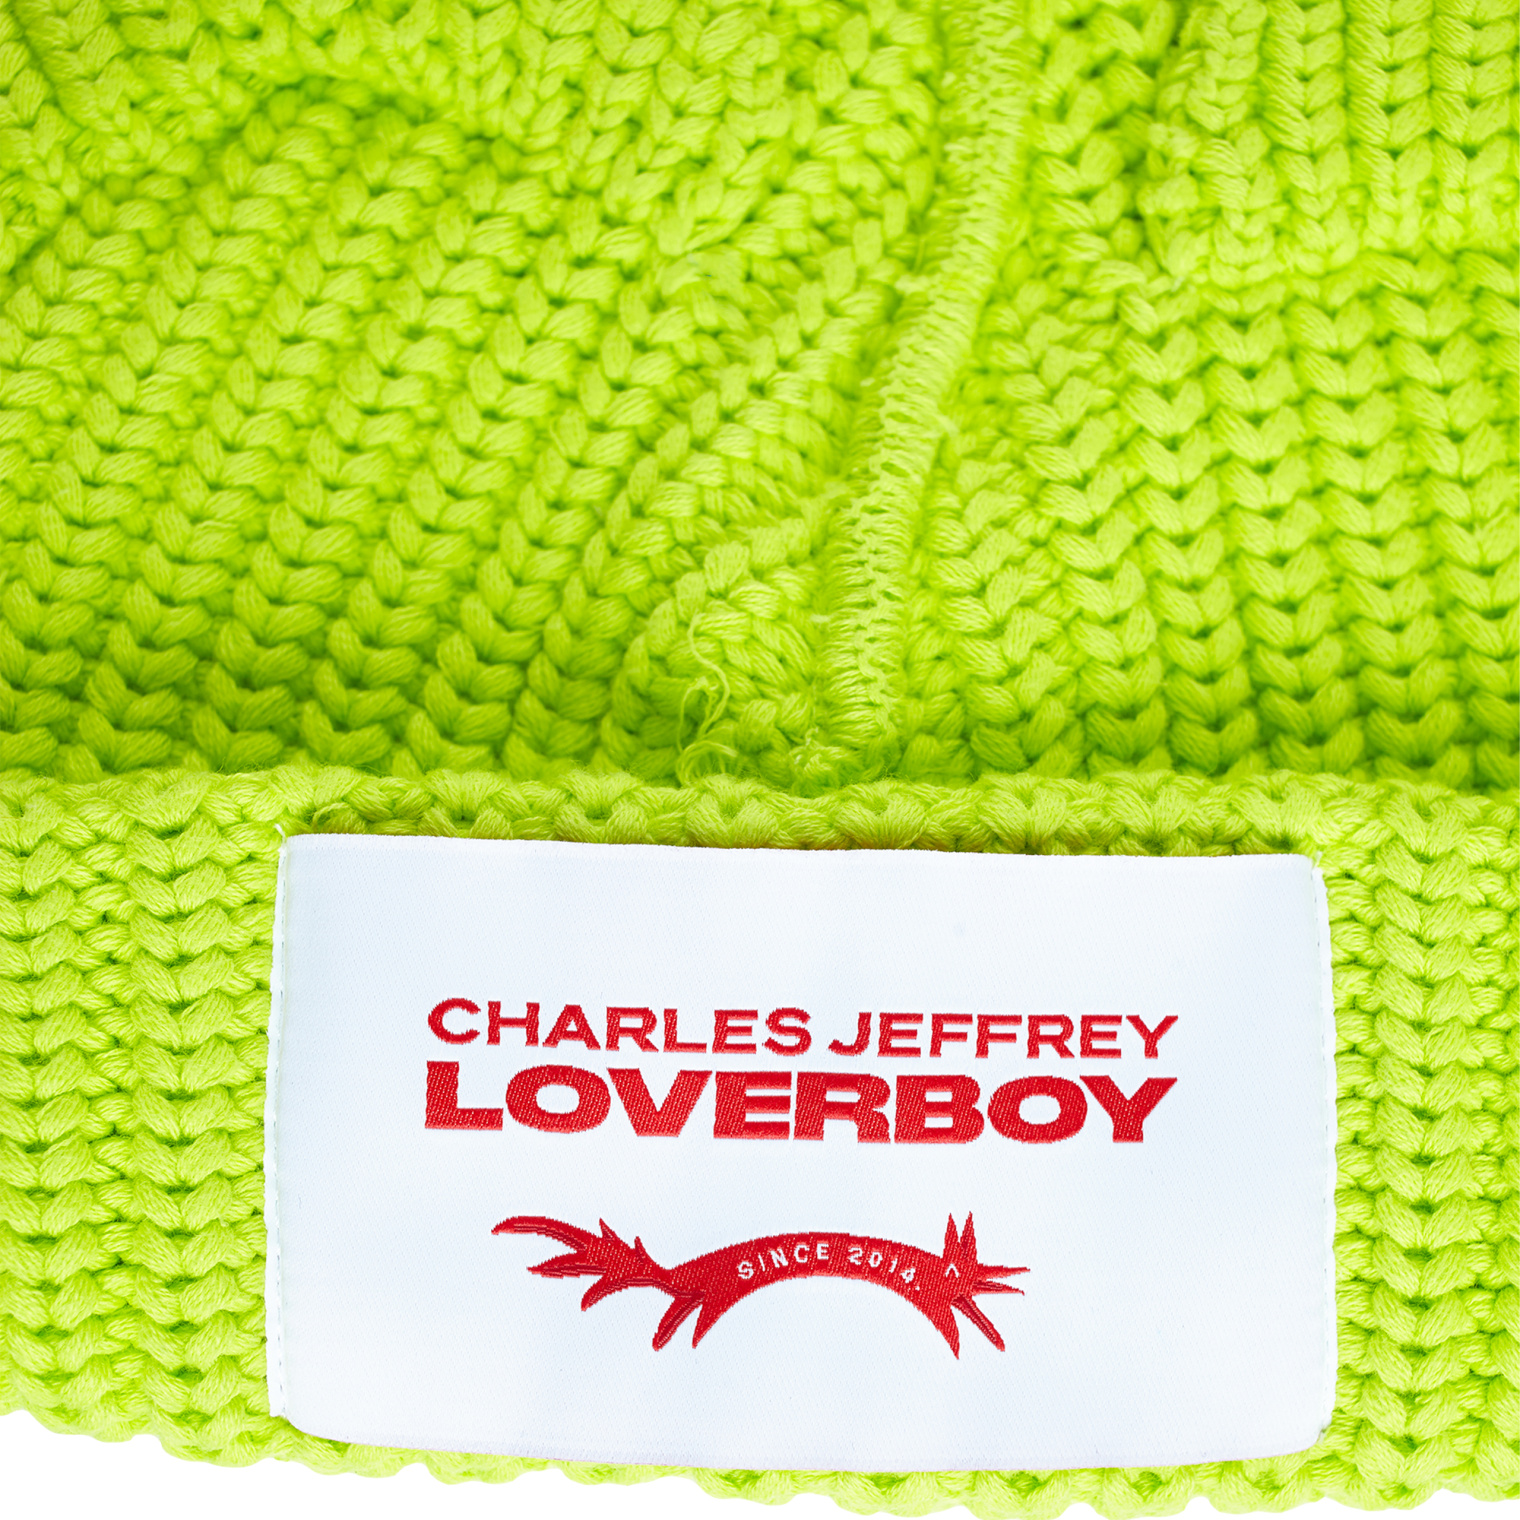 CHARLES JEFFREY LOVERBOY Green сhunky ears beanie